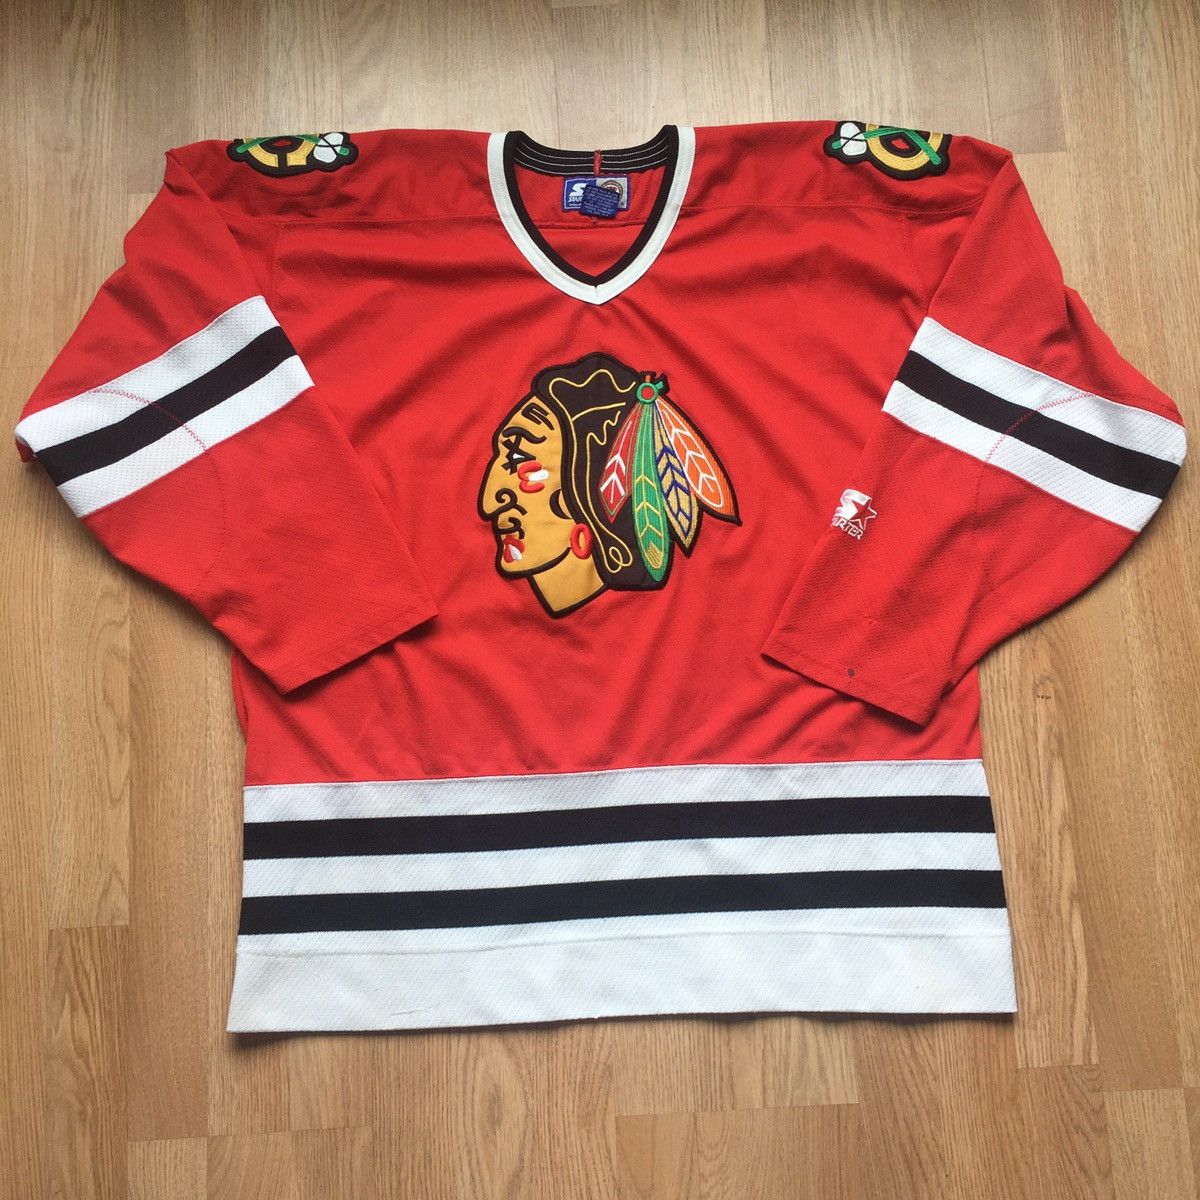 Vintage Vintage 90’s Starter Chicago Blackhawks NHL Hockey Jersey XL Size US XL / EU 56 / 4 - 1 Preview